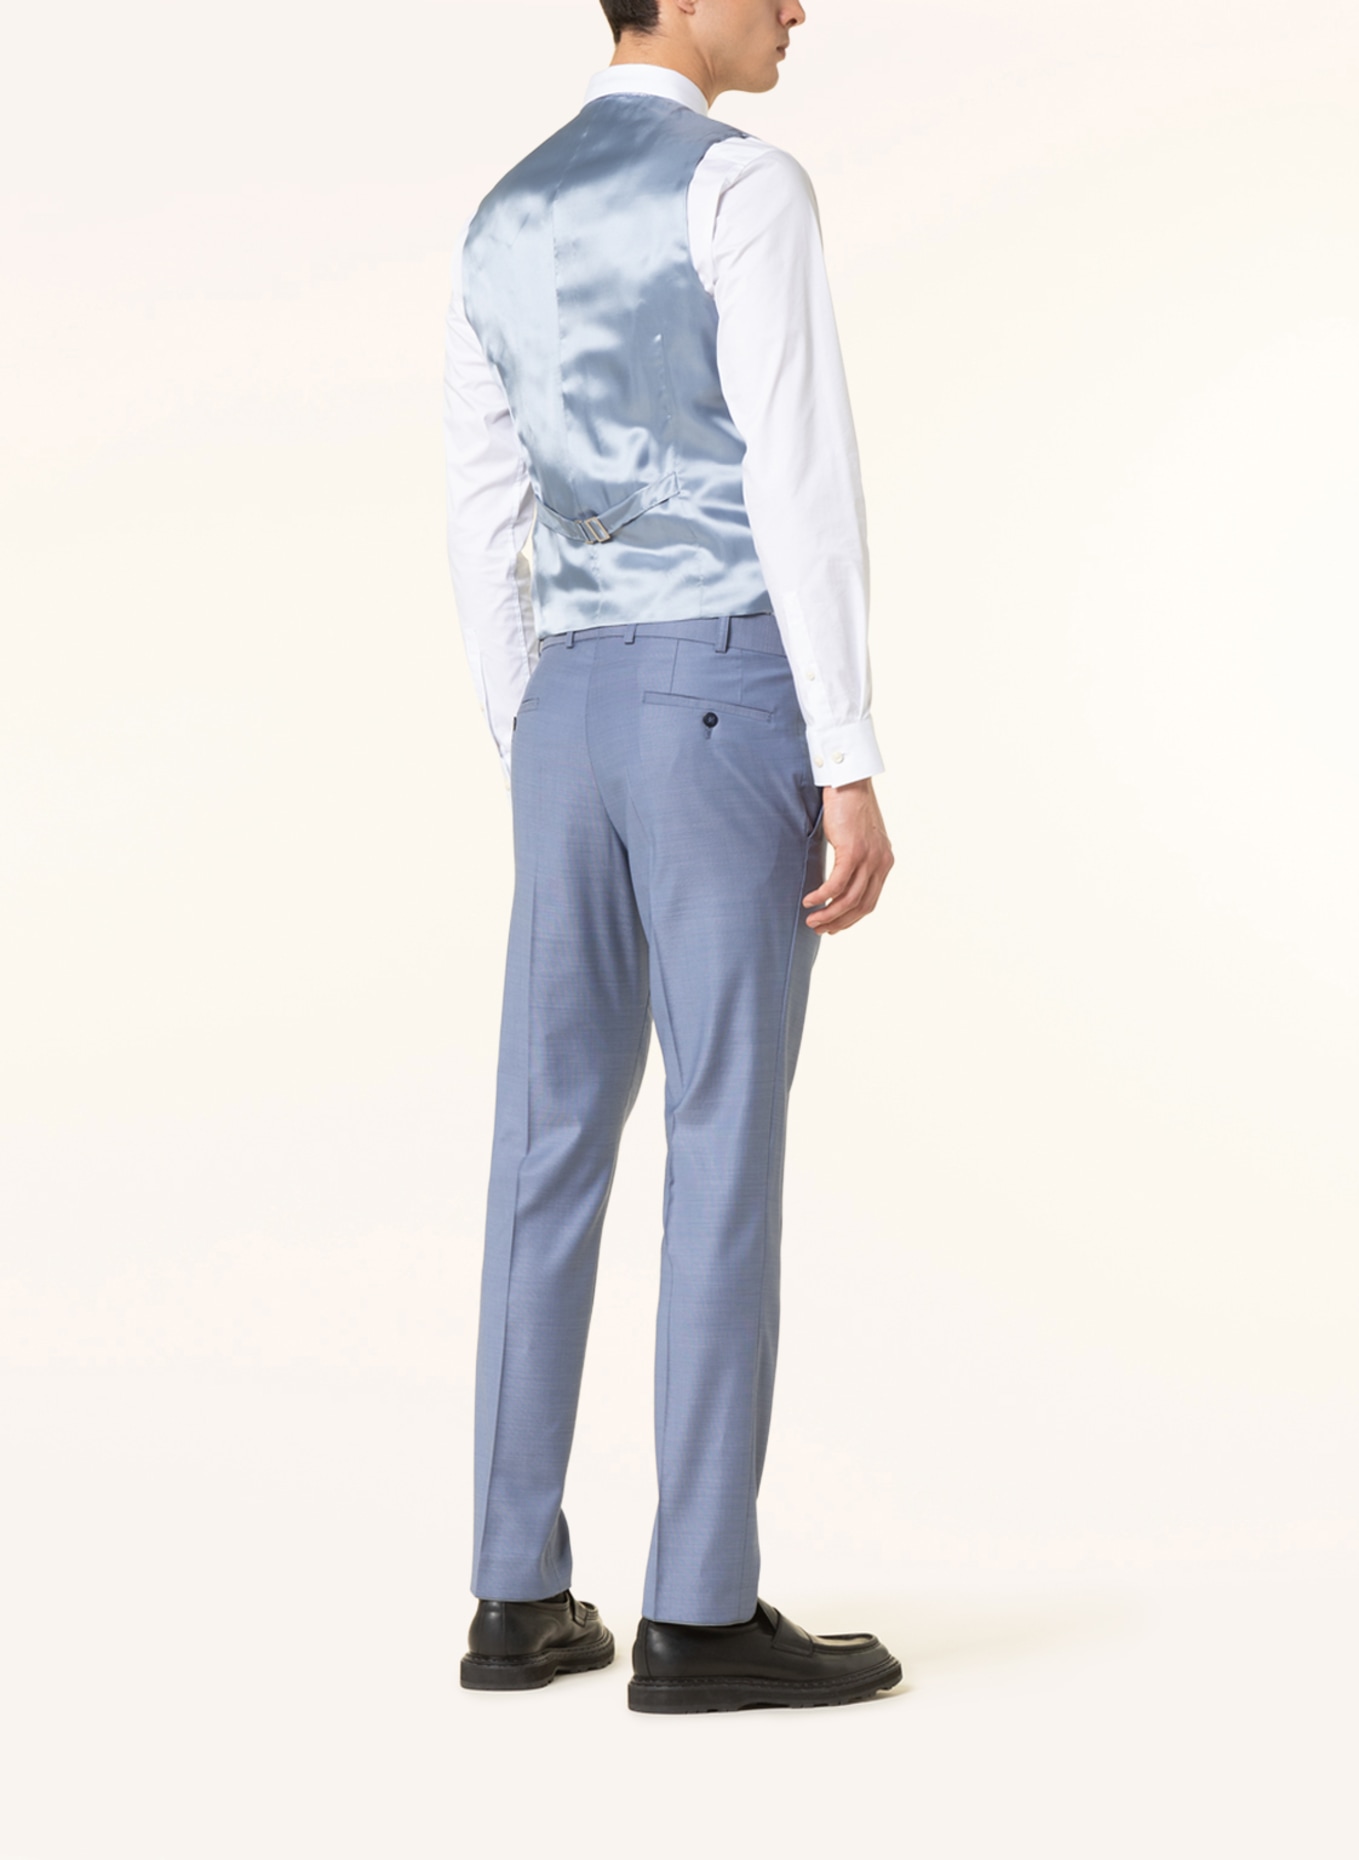 WILVORST Suit vest extra slim fit, Color: LIGHT BLUE (Image 4)